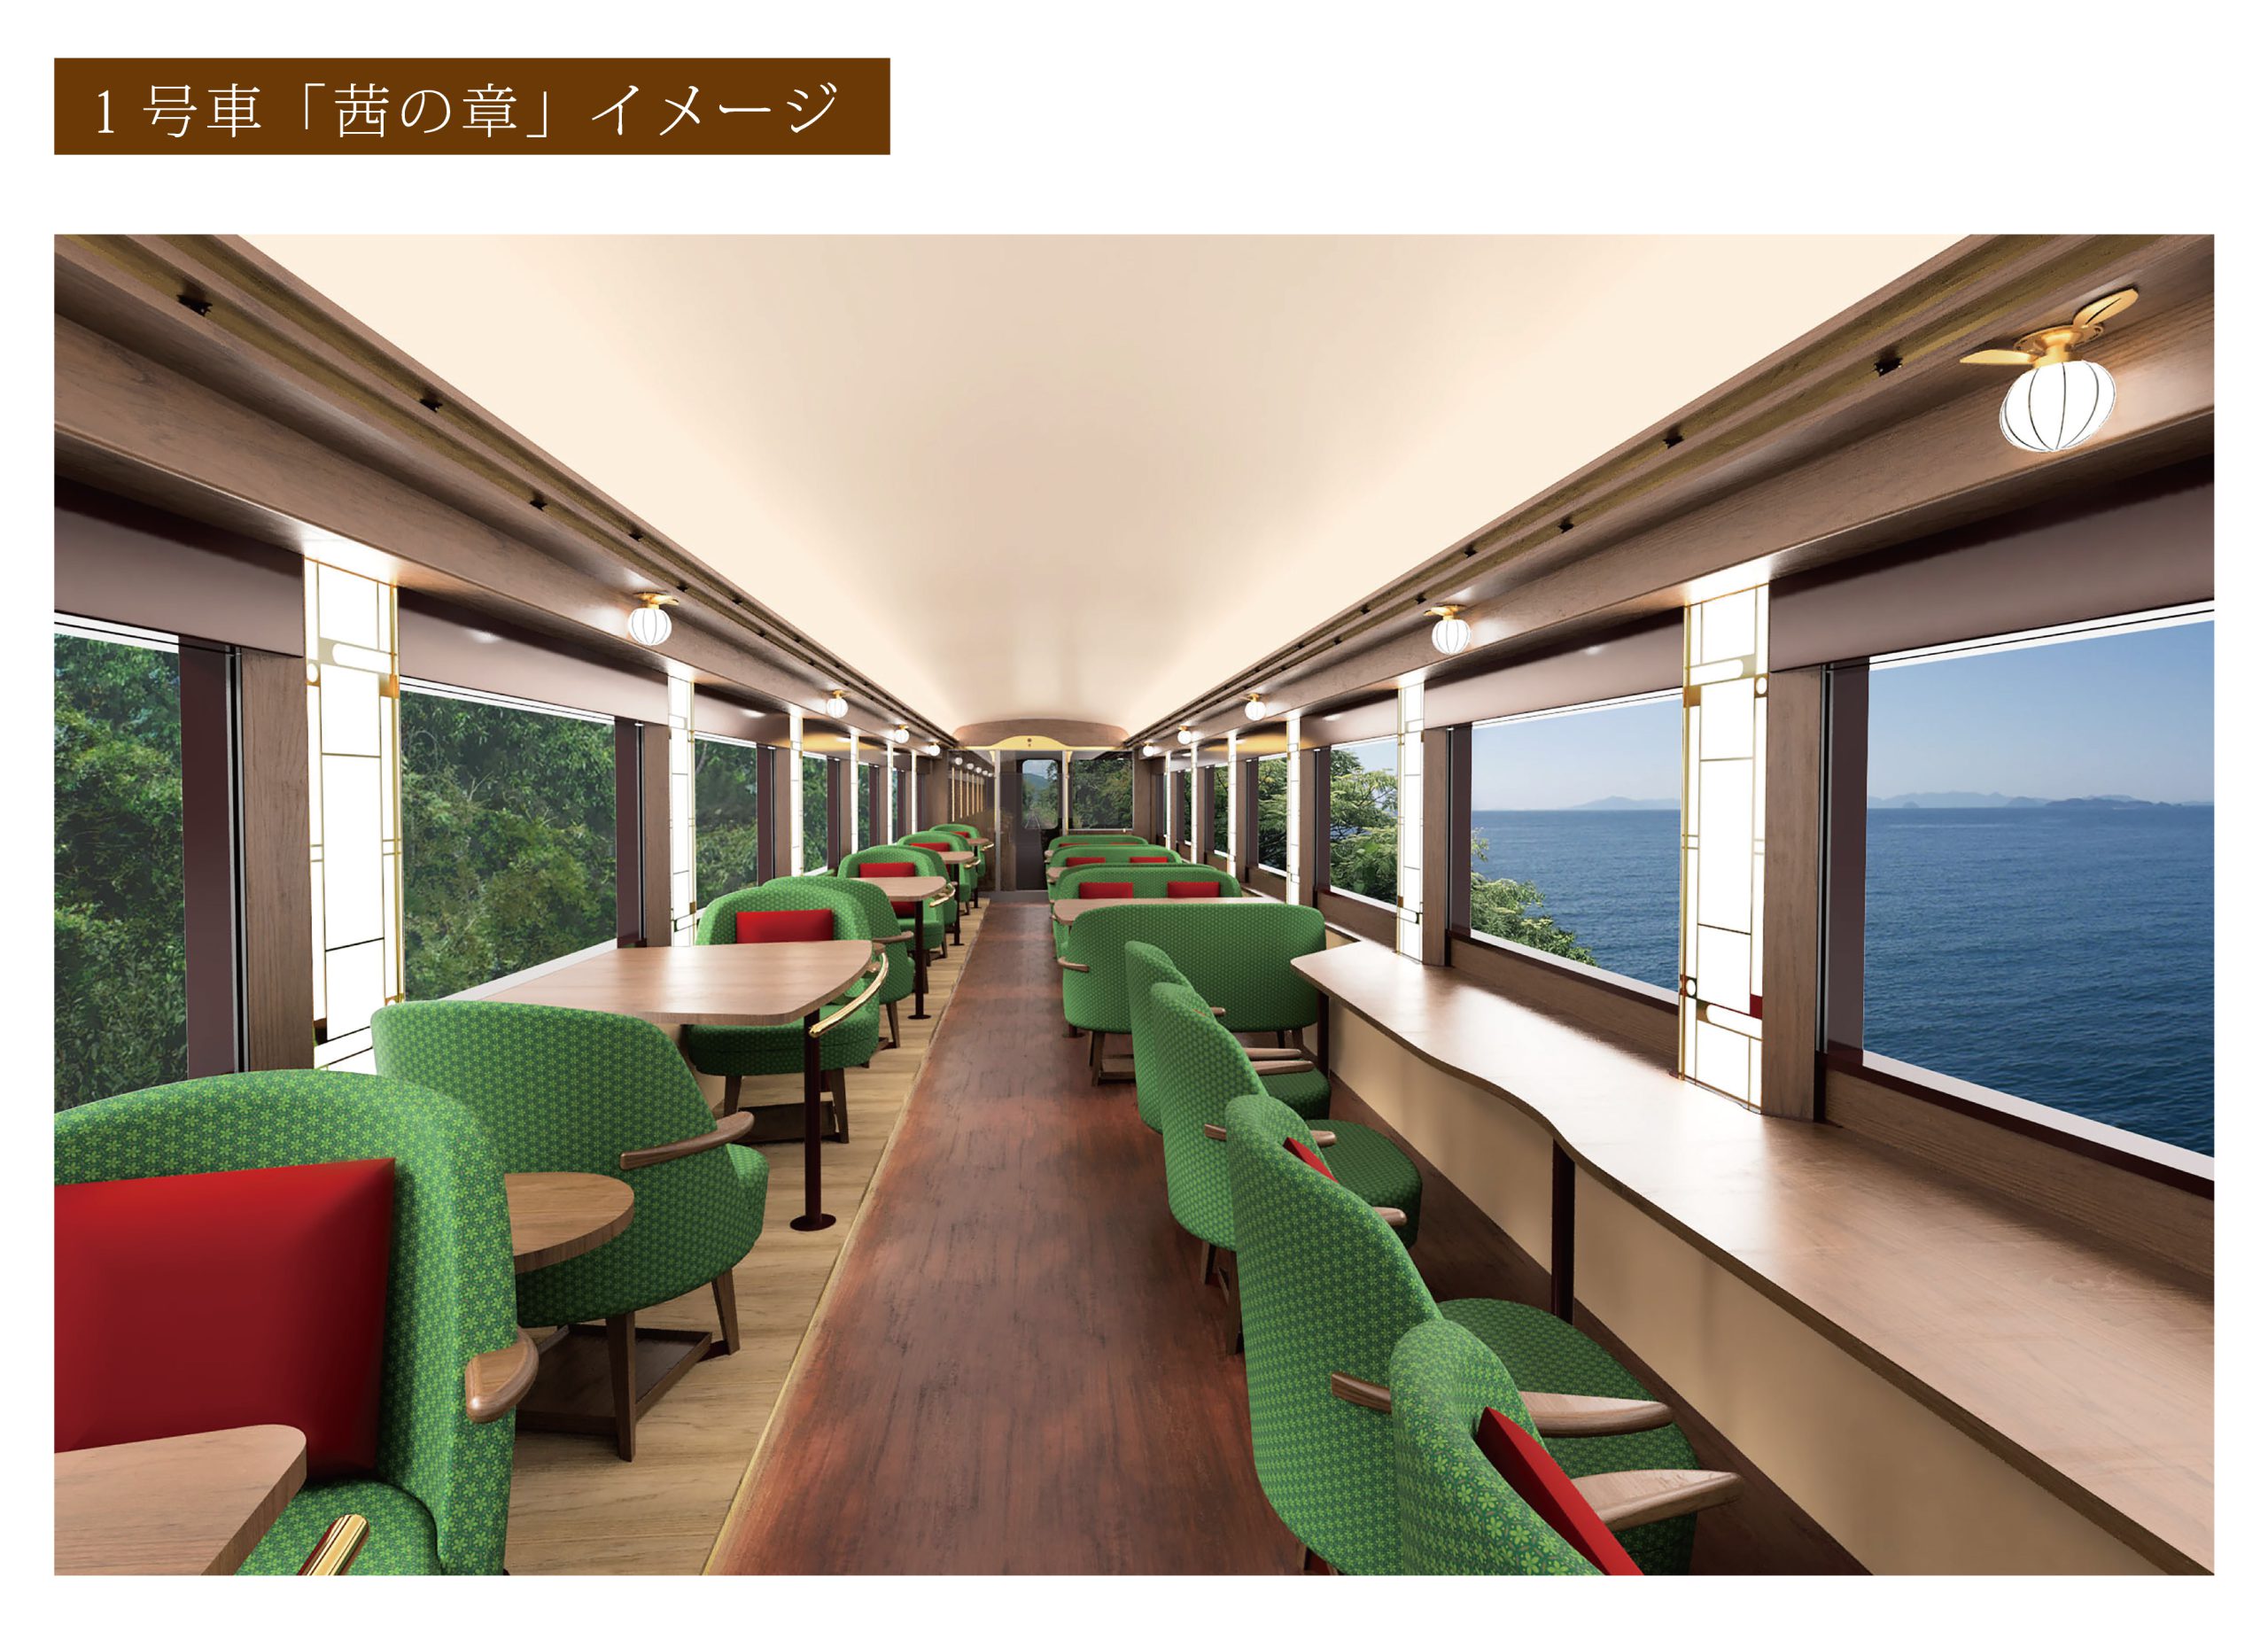 Iyonada Monogatori tourist train